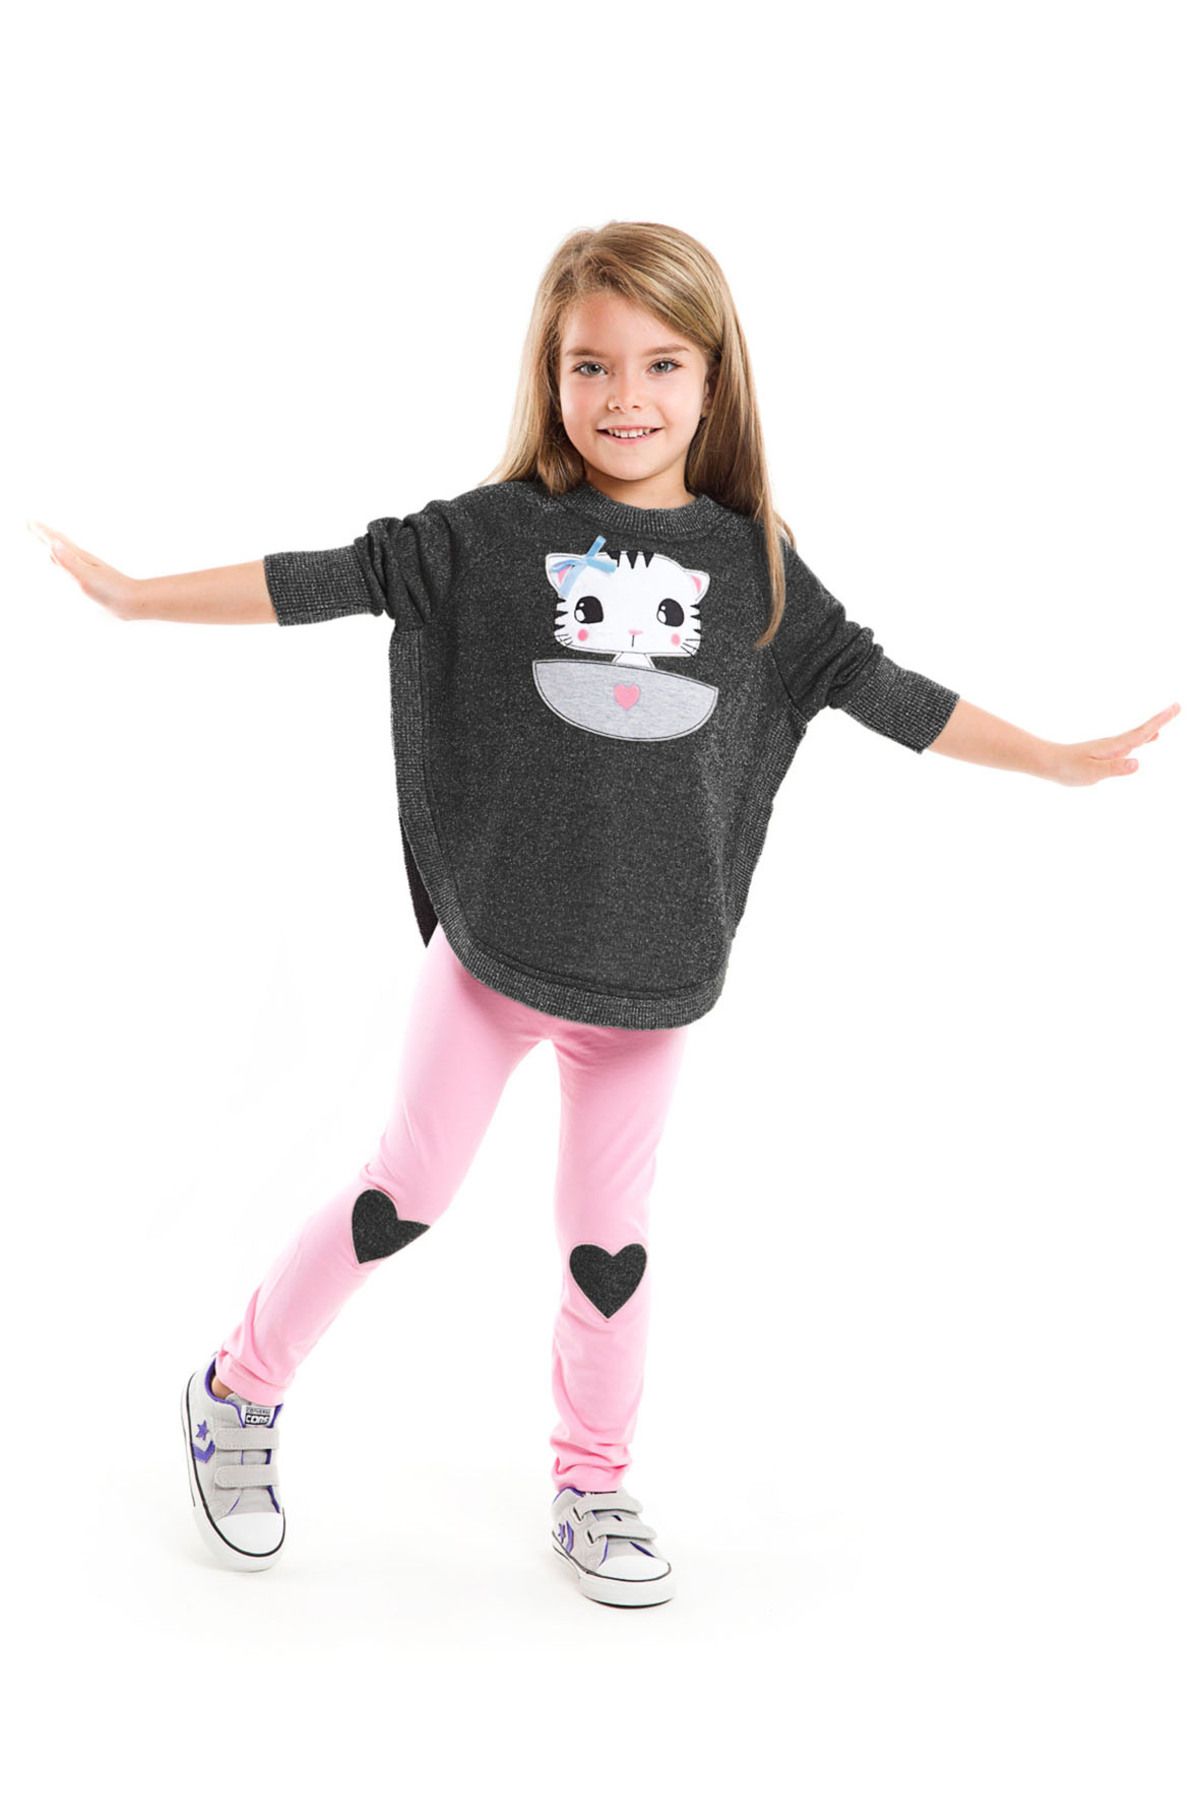 MSHB&G Sevgili Kedicik Kız Çocuk Sweatshirt Tayt Takım